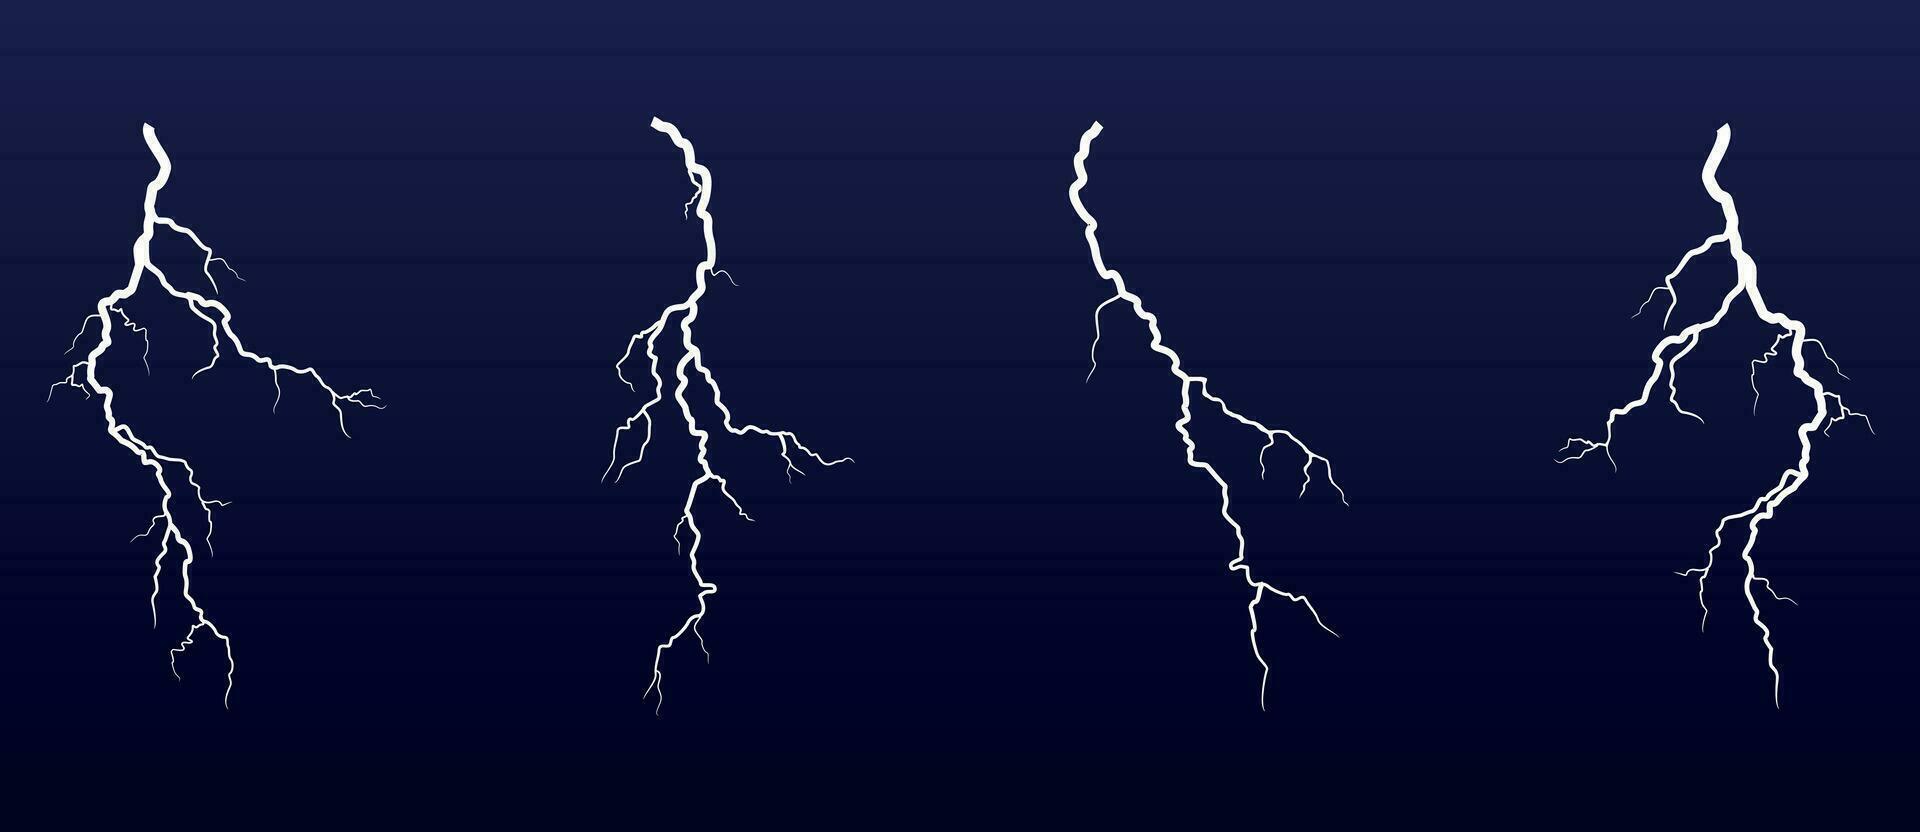 A set of four storm lightning bolts vector